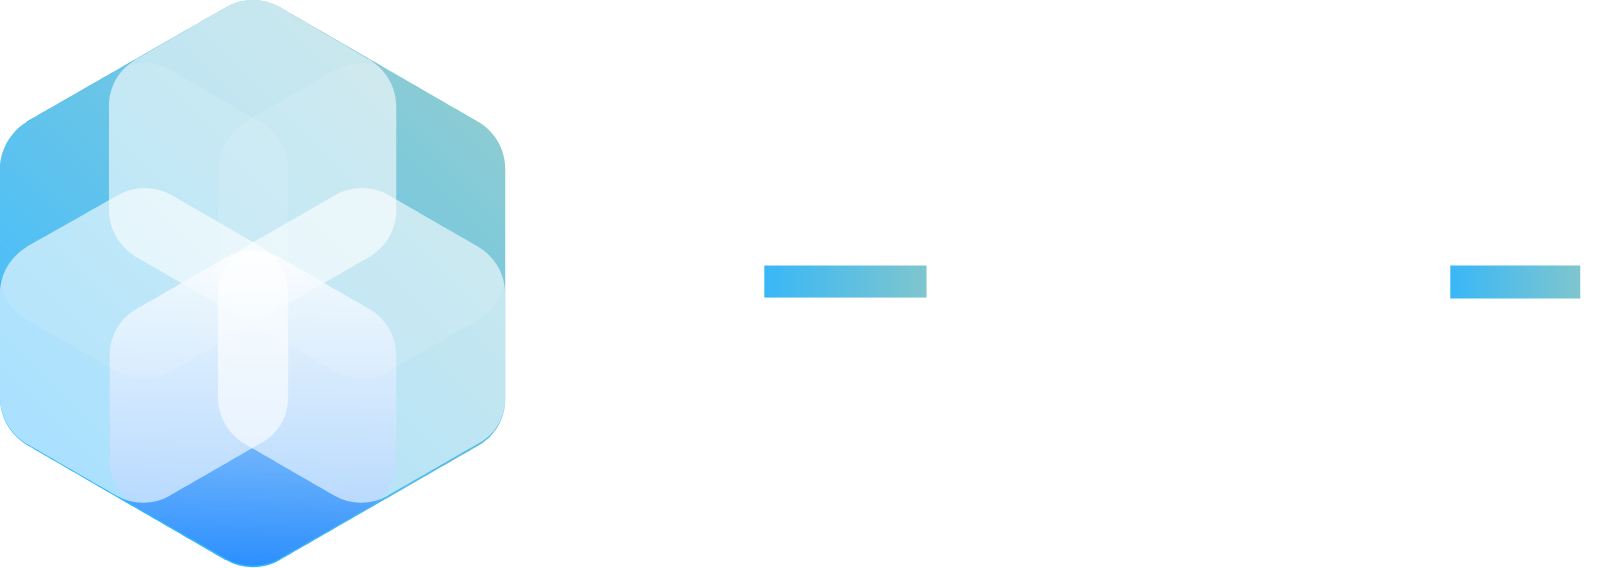 HIVE Blockchain Technologies logo large for dark backgrounds (transparent PNG)